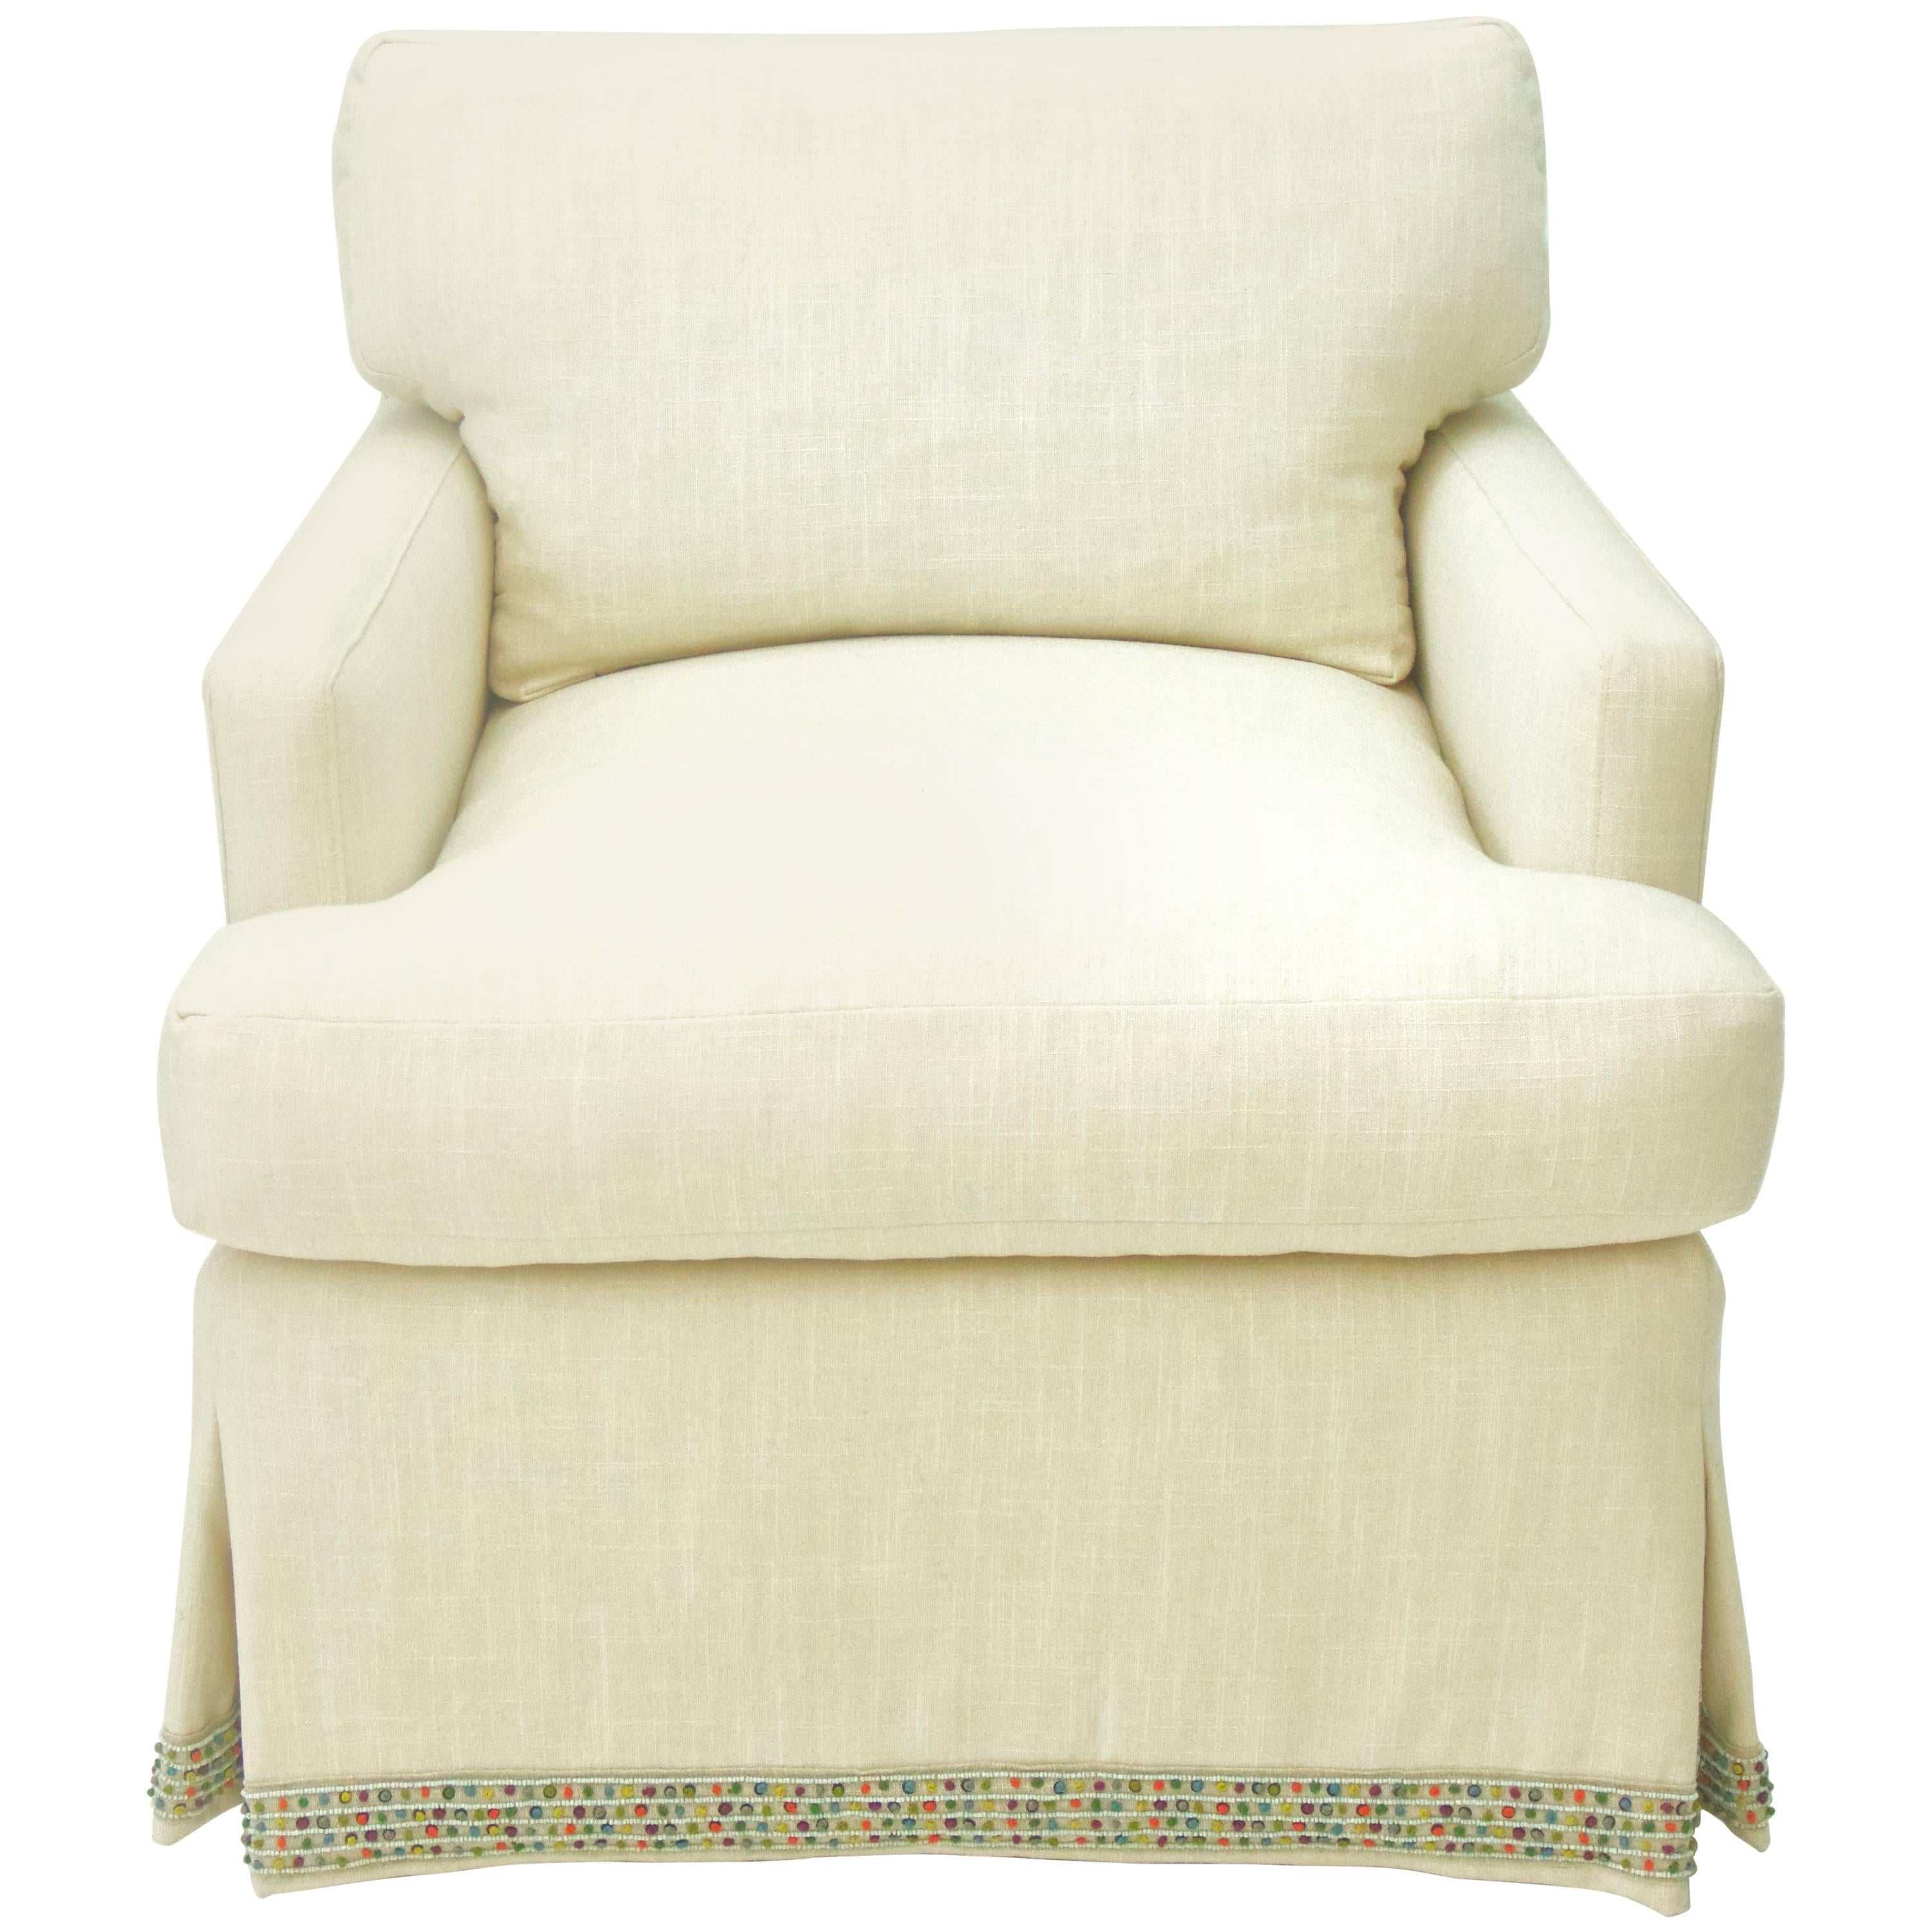 Carlota custom order - 2 skirted club chair and 2 two pillow ottomans, all COM